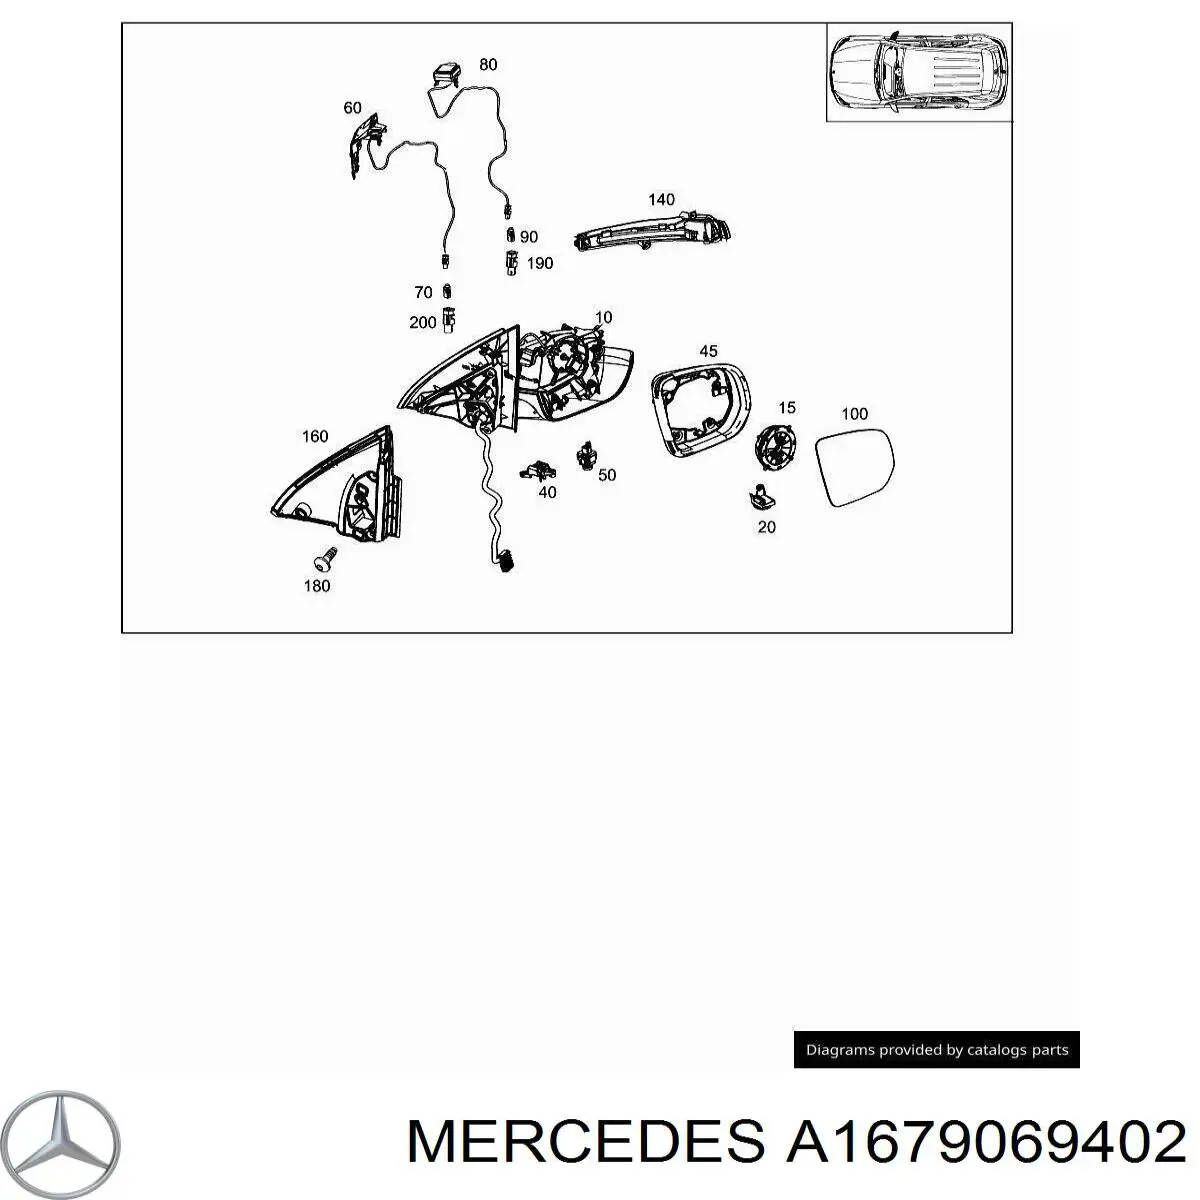 A1679069402 Mercedes 